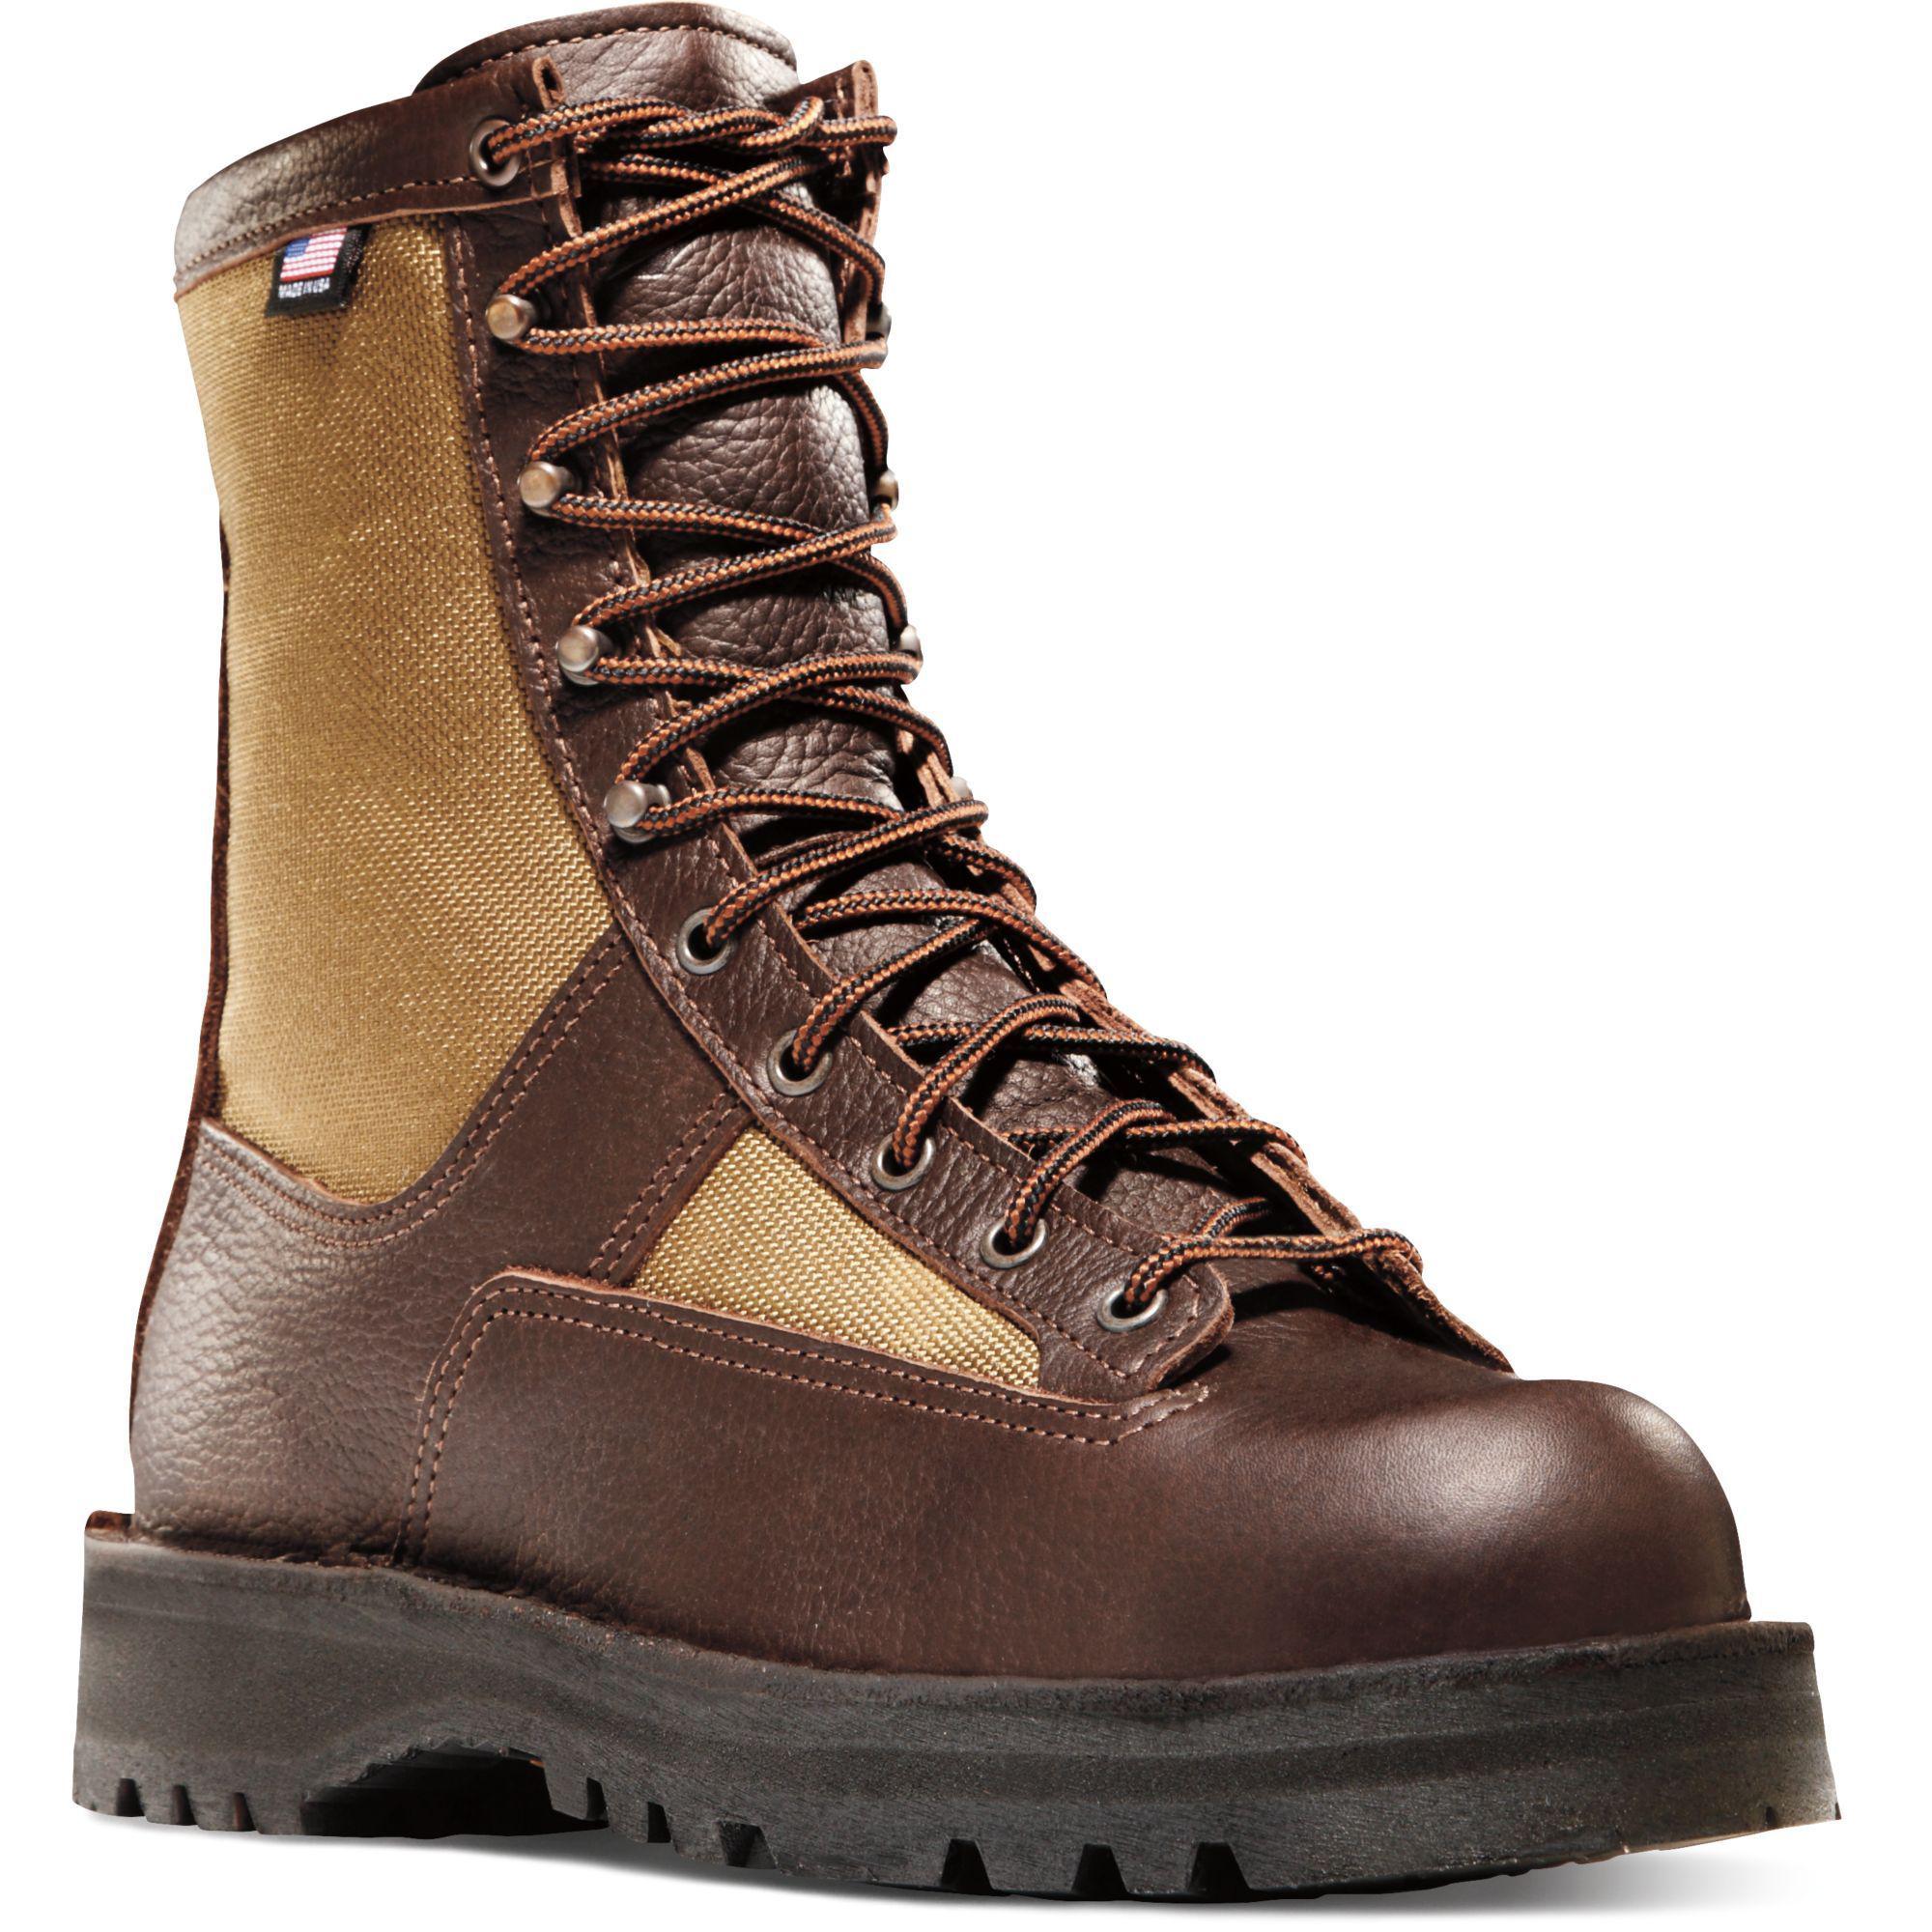 Danner Men's Sierra 8" USA Made Insulated WP Hunt Boot - Brown - 63100 7 / Medium / Brown - Overlook Boots